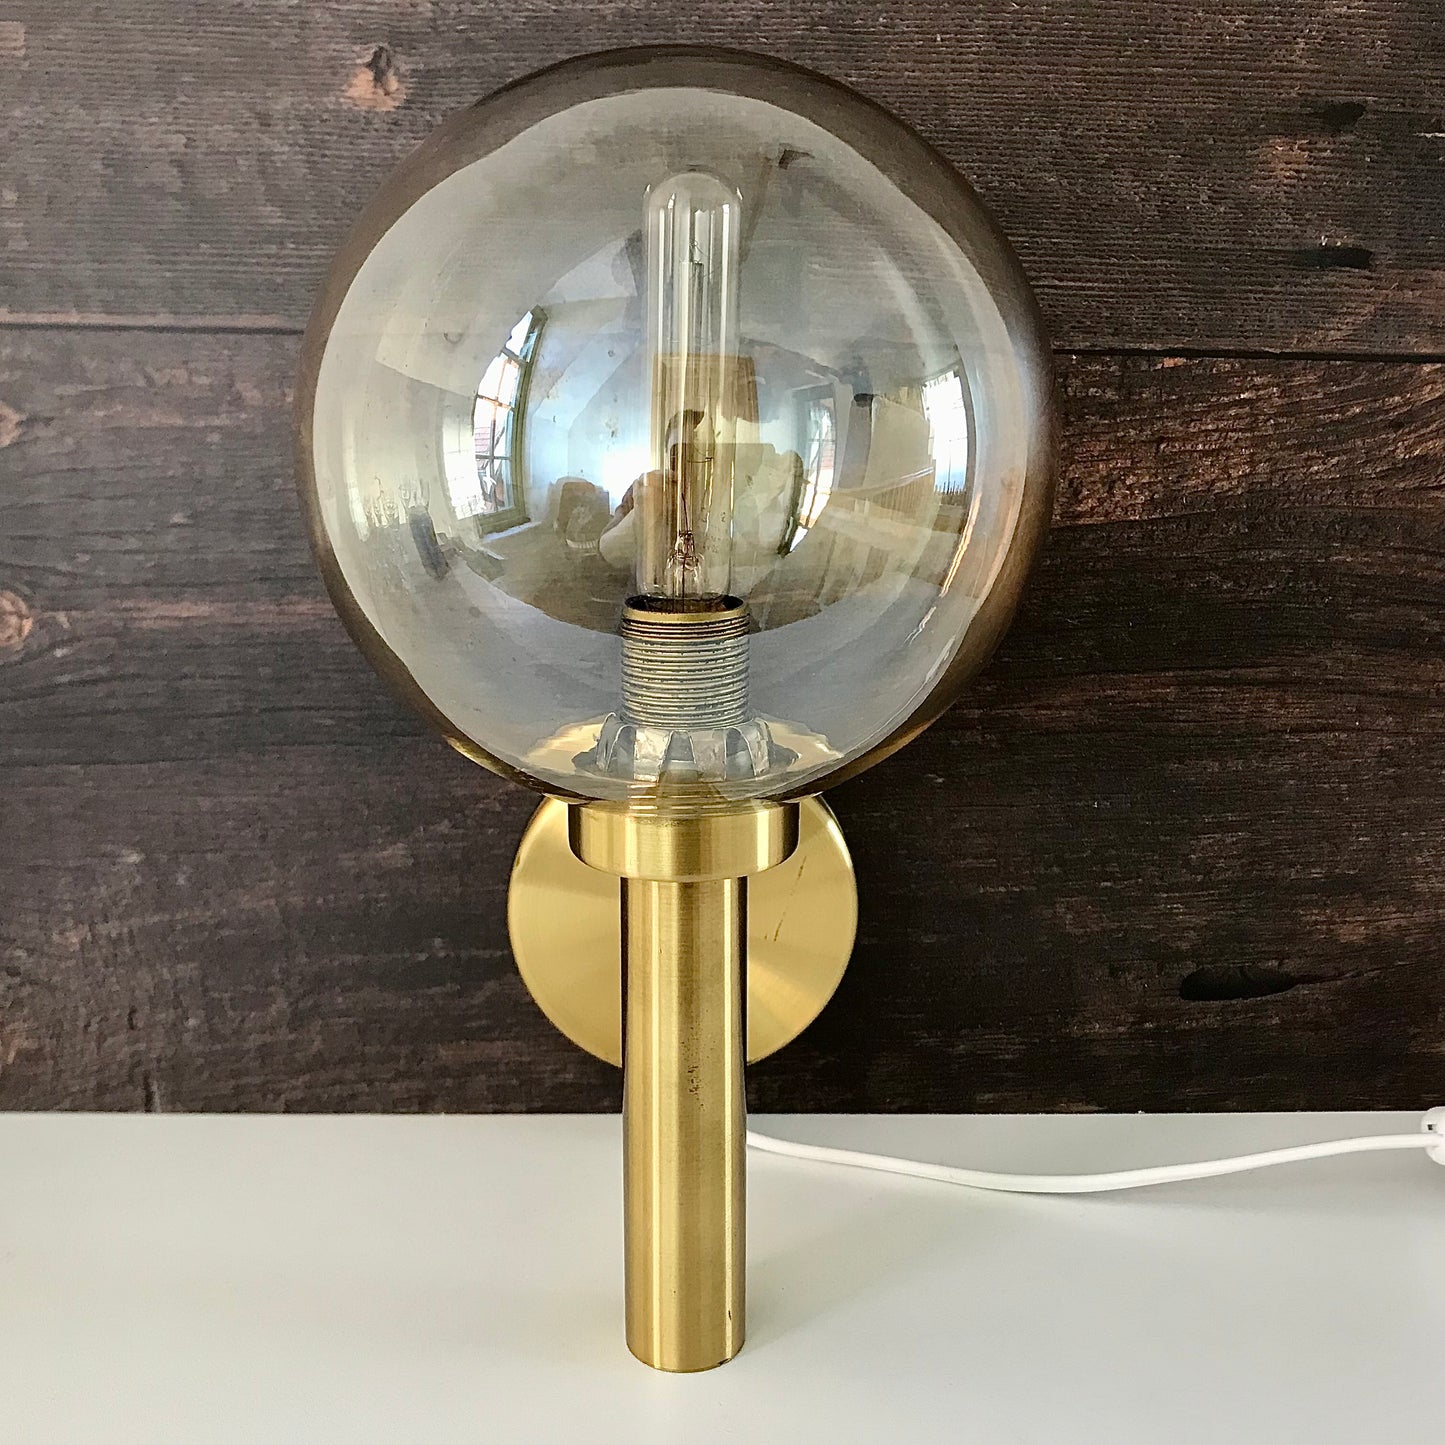 Danish Swedish Glass Sconce Wall Lamp Retro Vintage Lighting